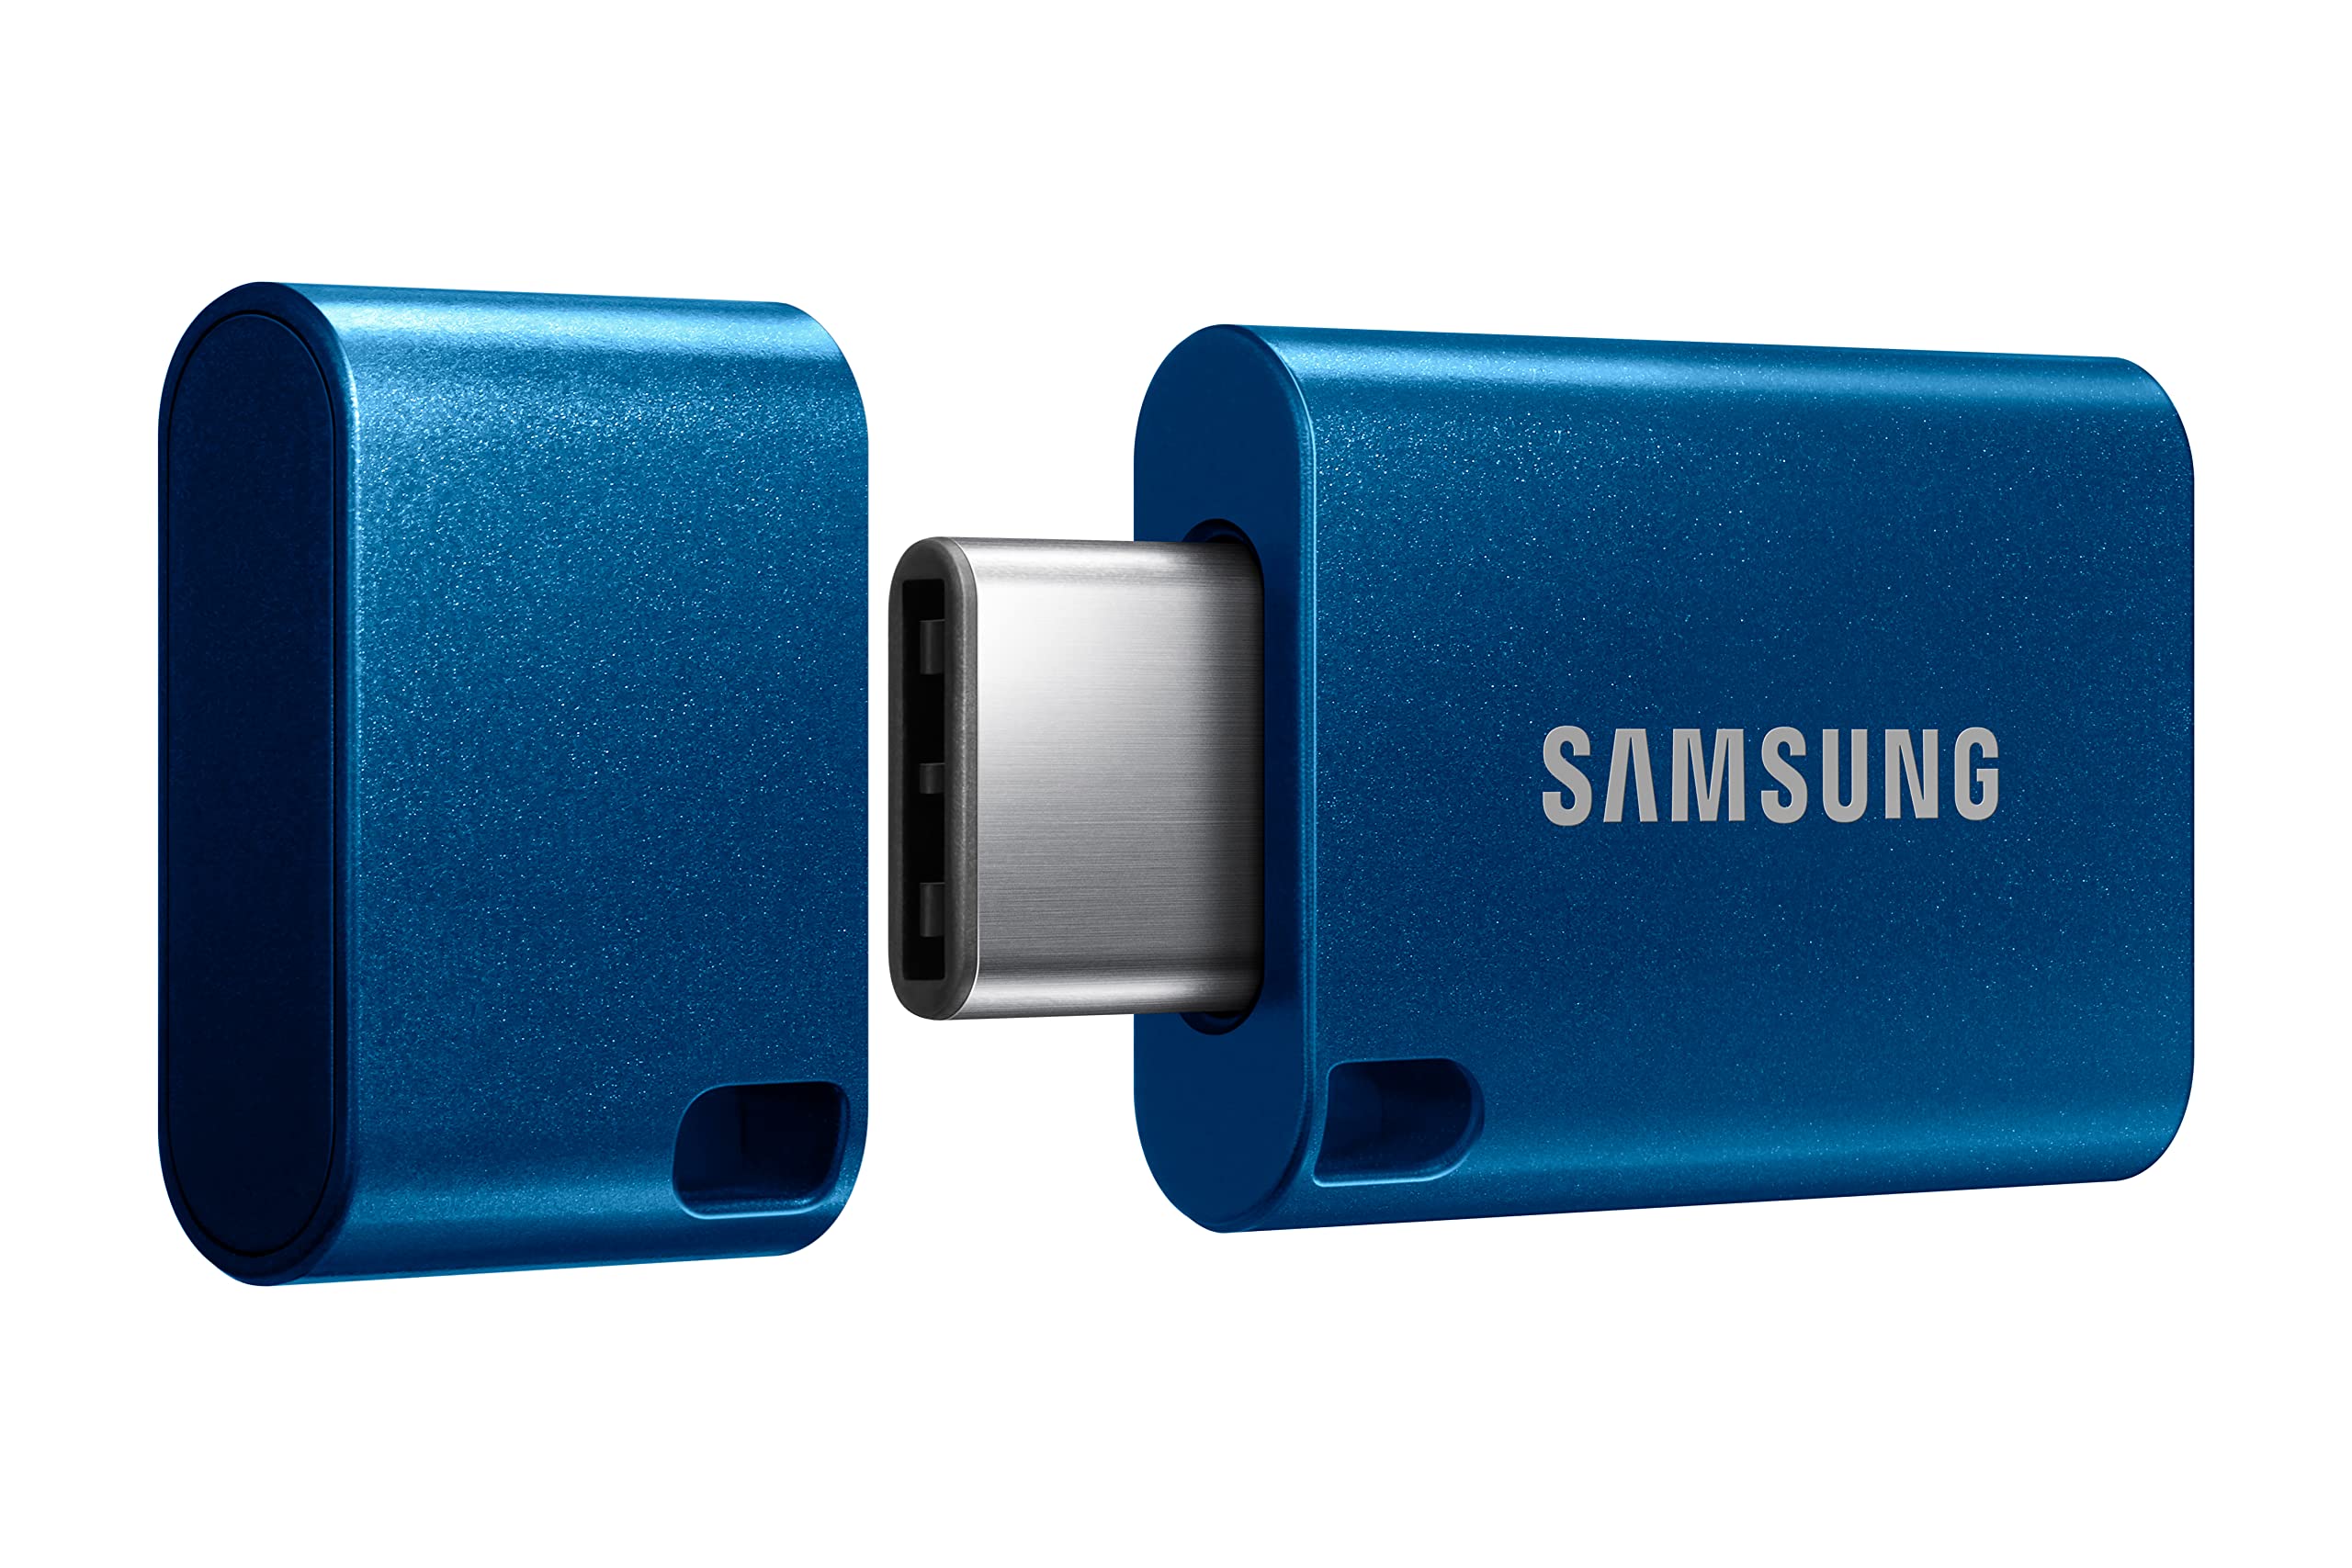 SAMSUNG Type-C™ USB Flash Drive, 128GB, Transfers 4GB Files in 11 Secs w/Up to 400MB/s 3.13 Read Speeds, Compatible w/USB 3.0/2.0, Waterproof, 2022